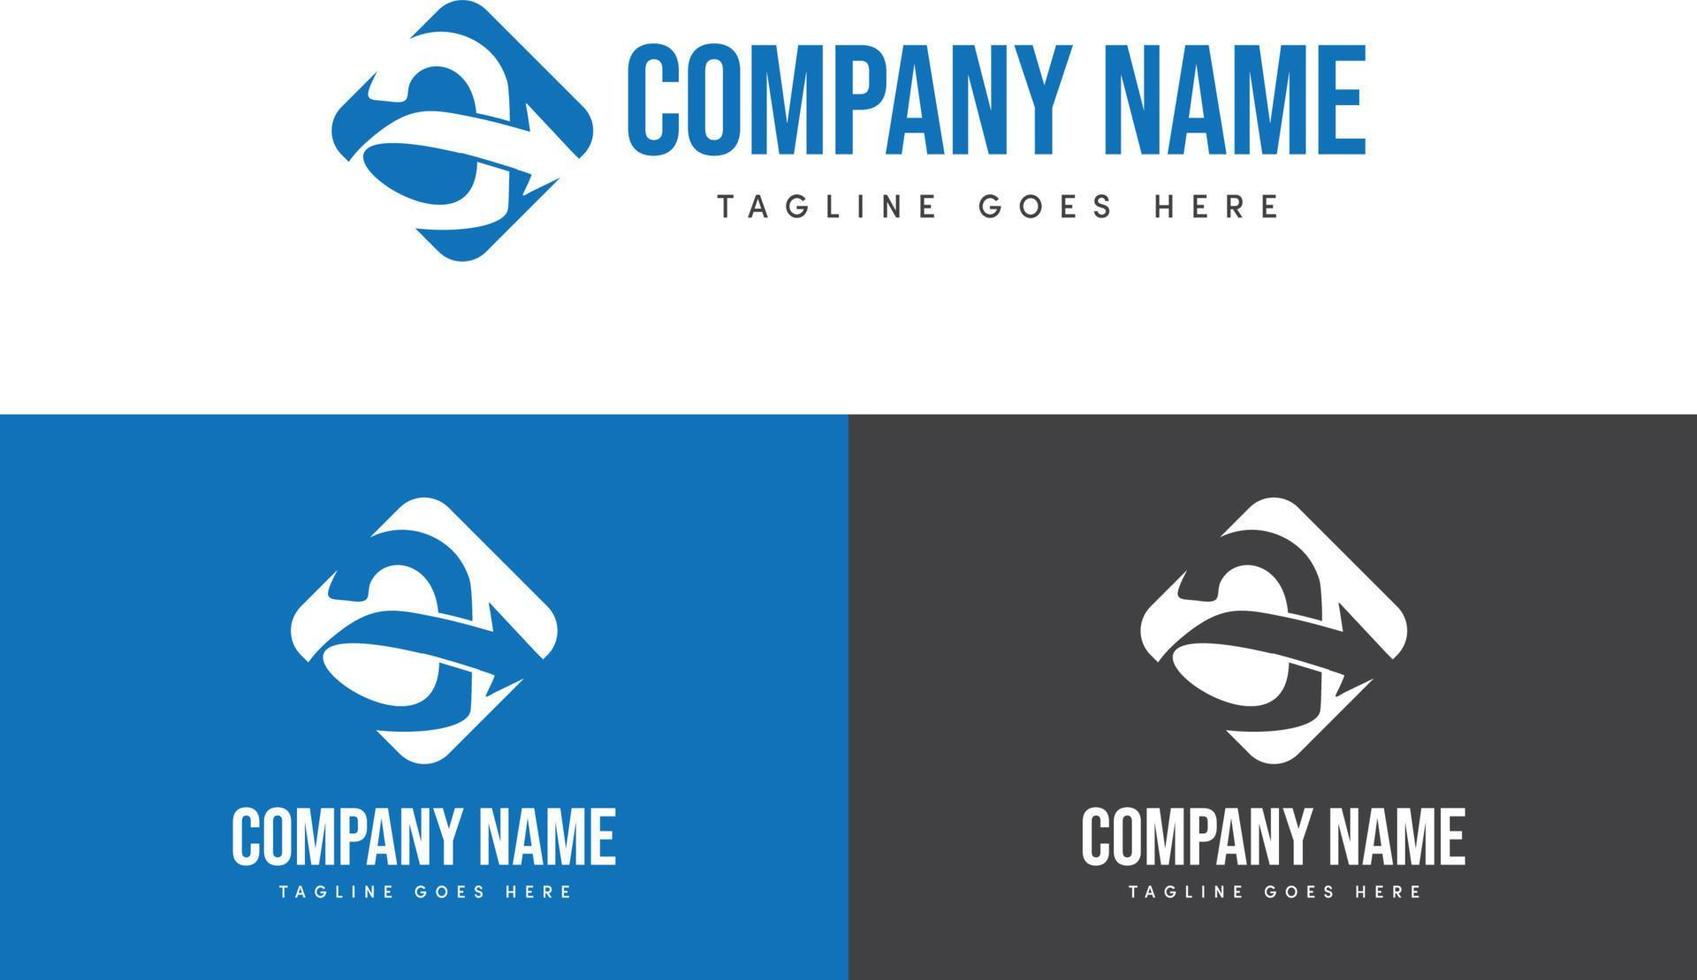 Branding identity corporate a logo vector design template